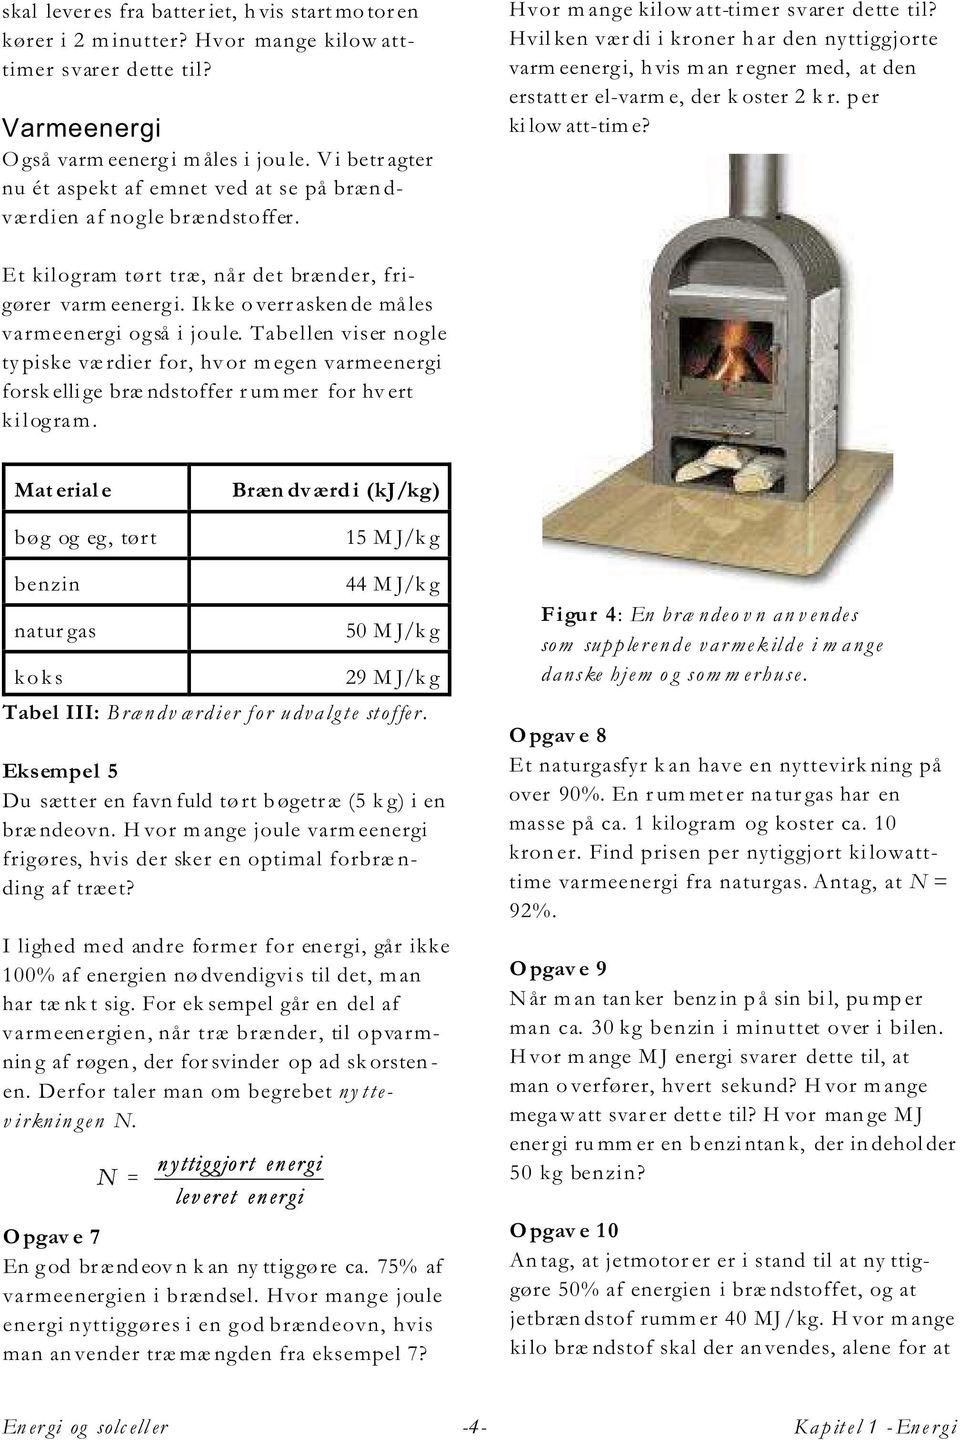 Hvilken værdi i kroner har den nyttiggjorte varm eenergi, hvis man regner med, at den erstatter el-varm e, der k oster 2 k r. per kilow att-tim e?